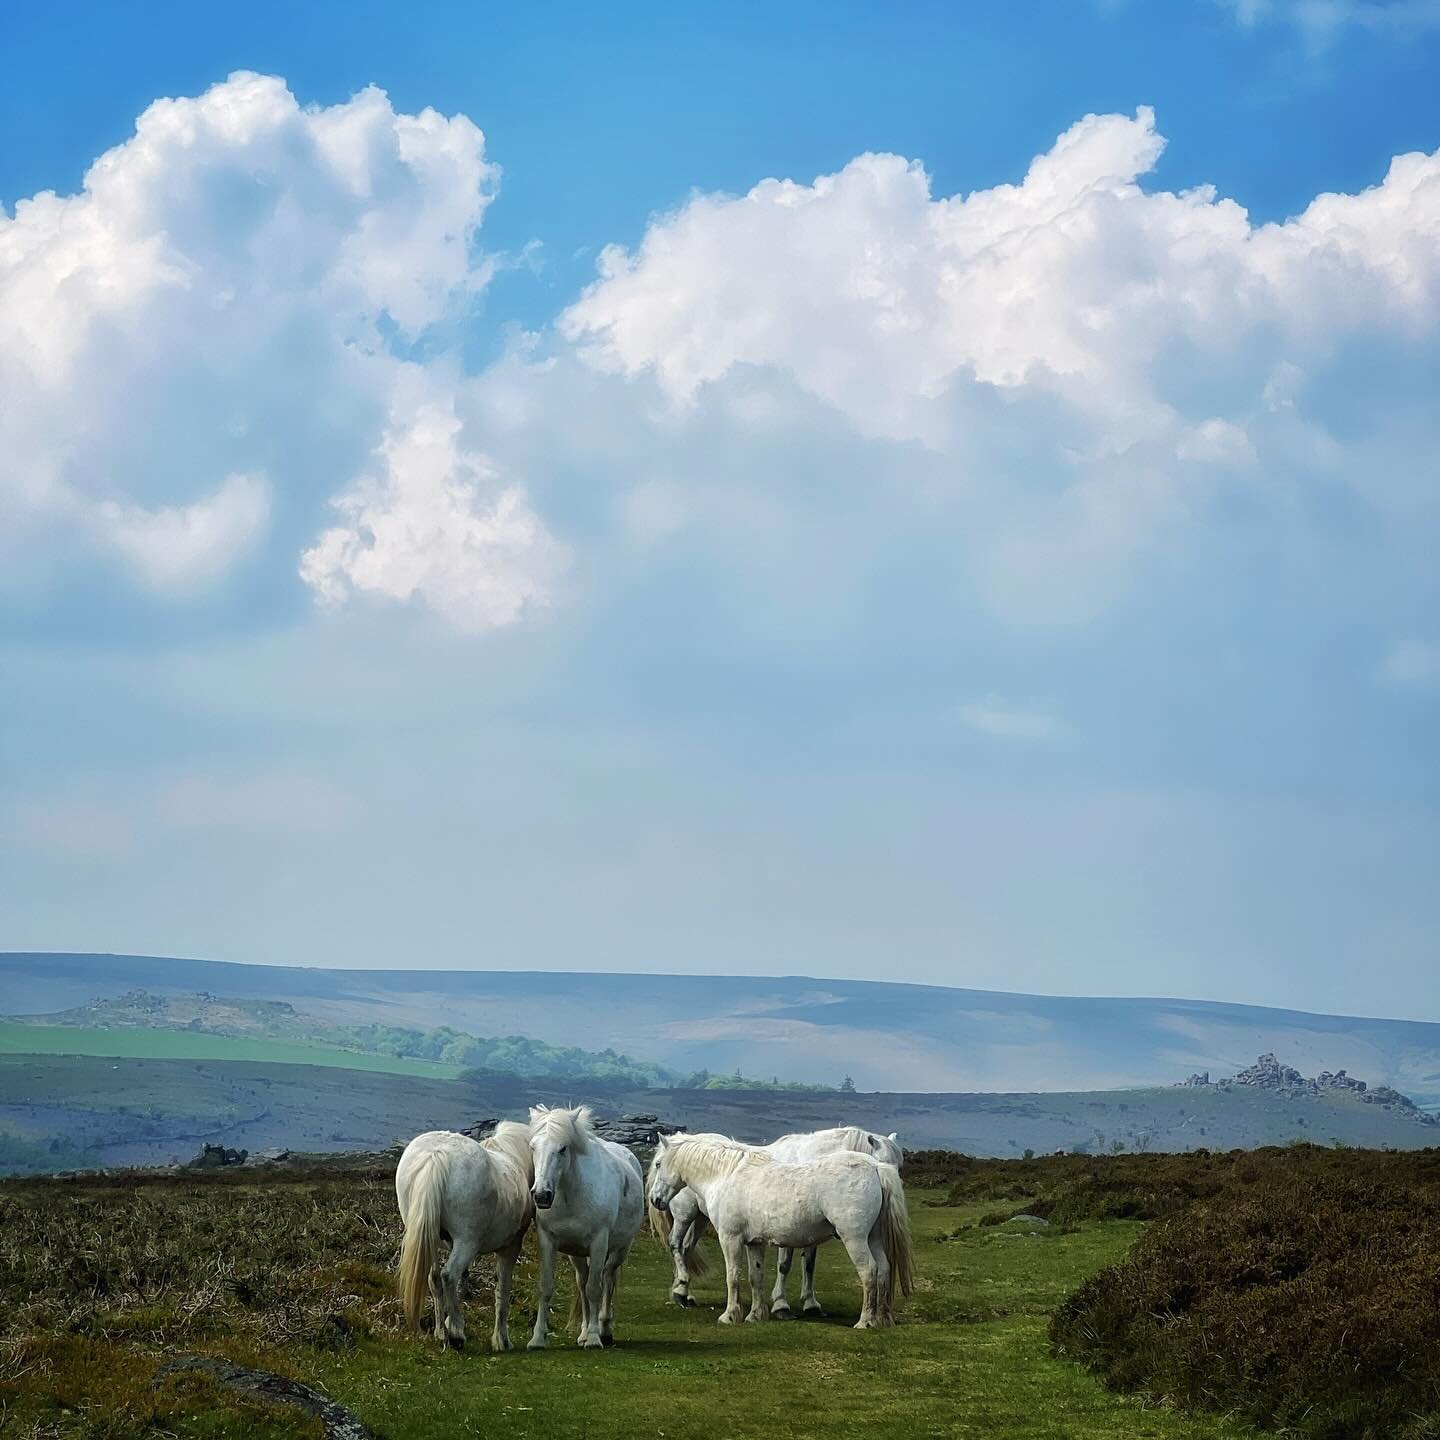 A beautiful walk on Dartmoor with views of the Dartmoor ponies